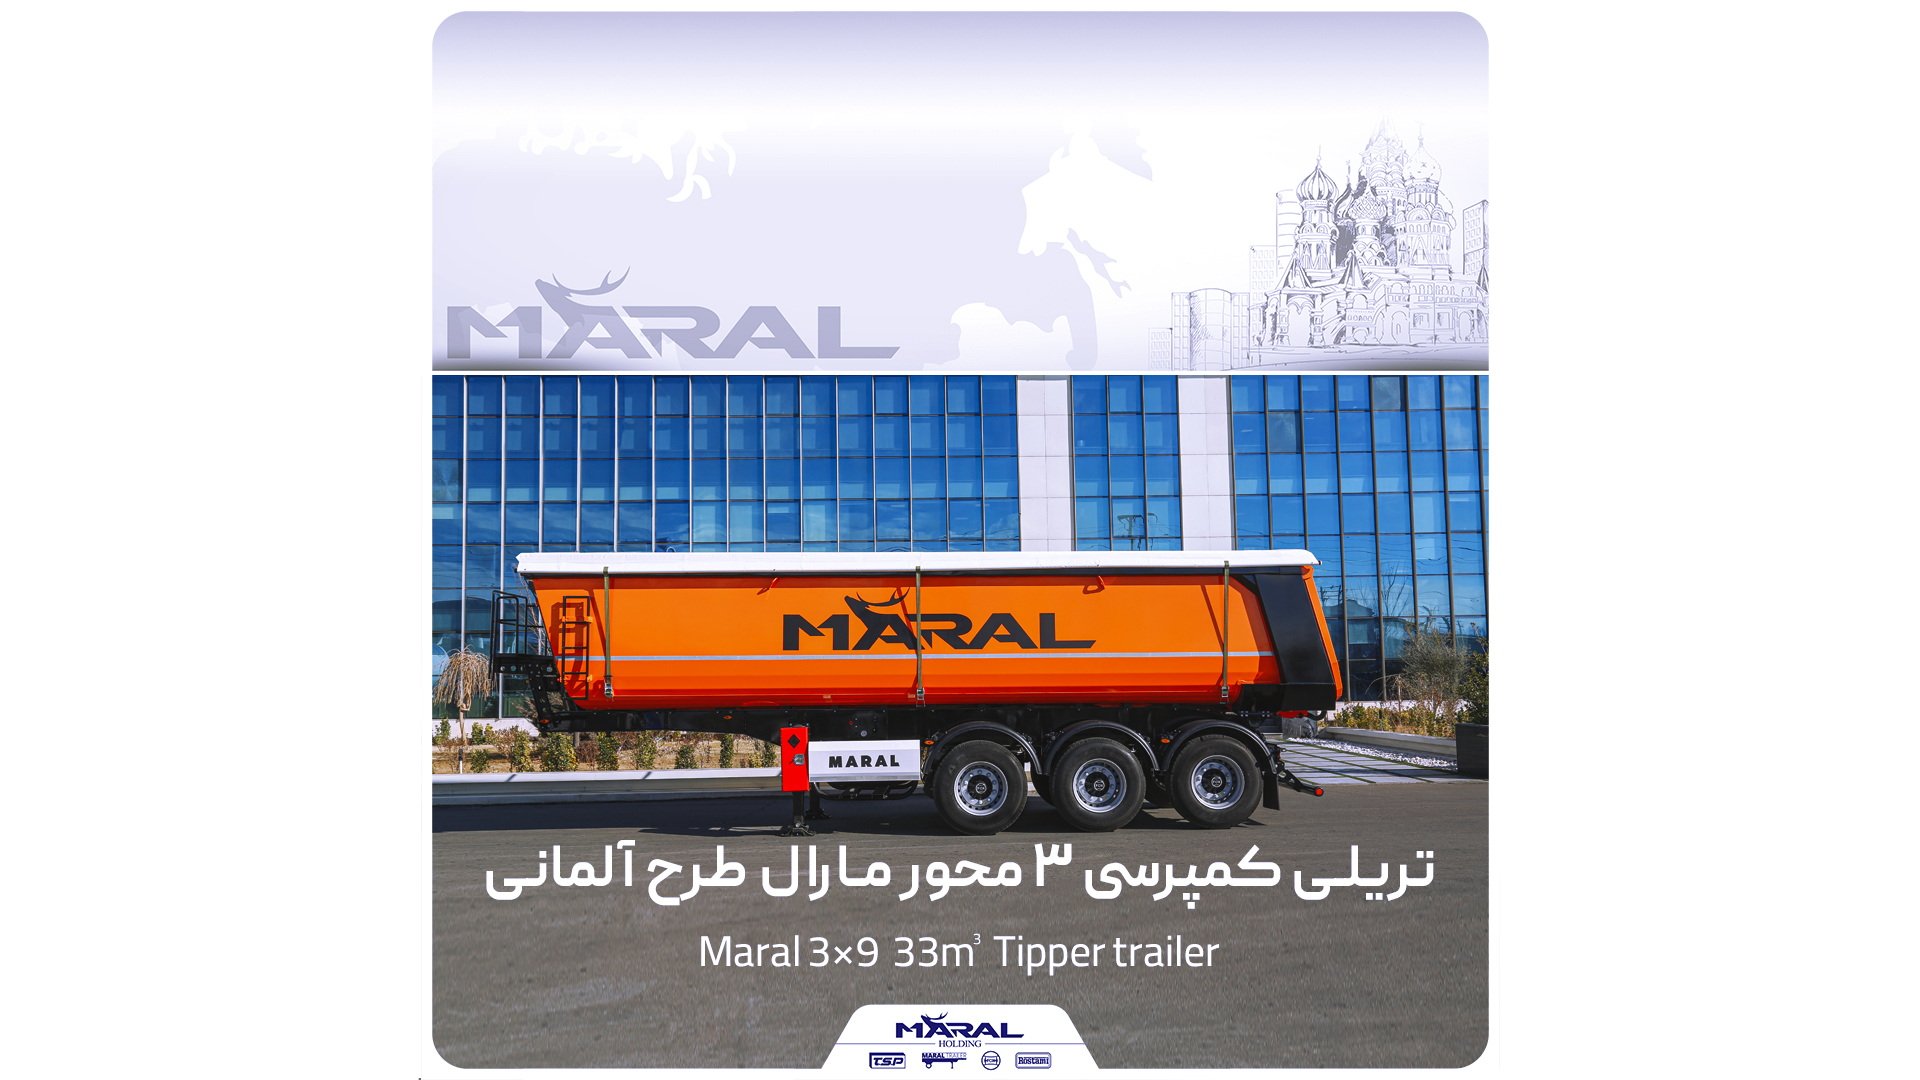 Maral 3*9 Tipper trailer